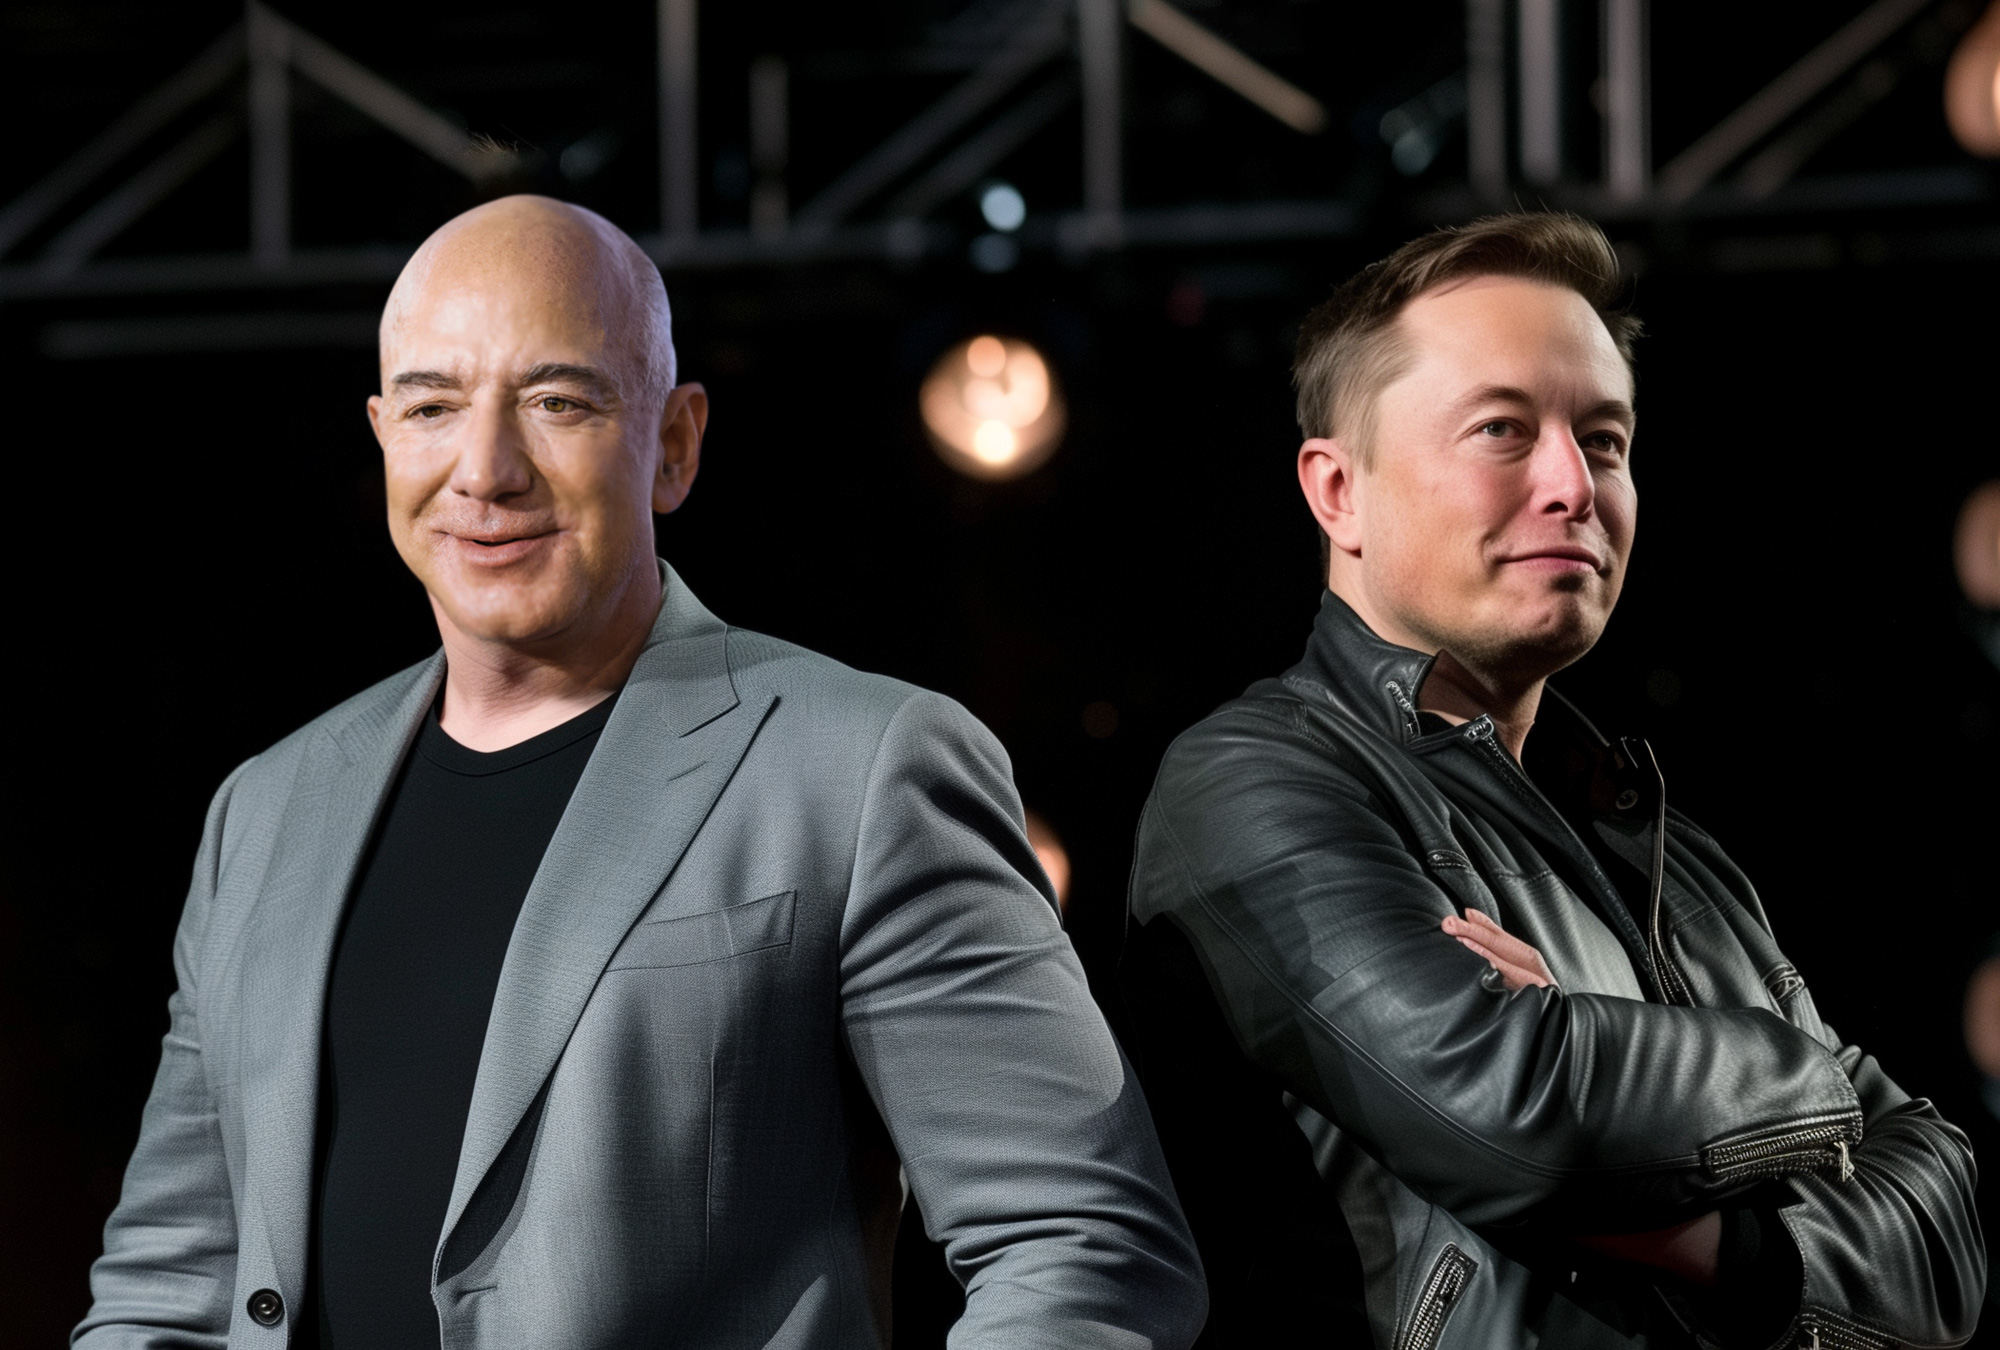 Jeff Bezos vs. Elon Musk